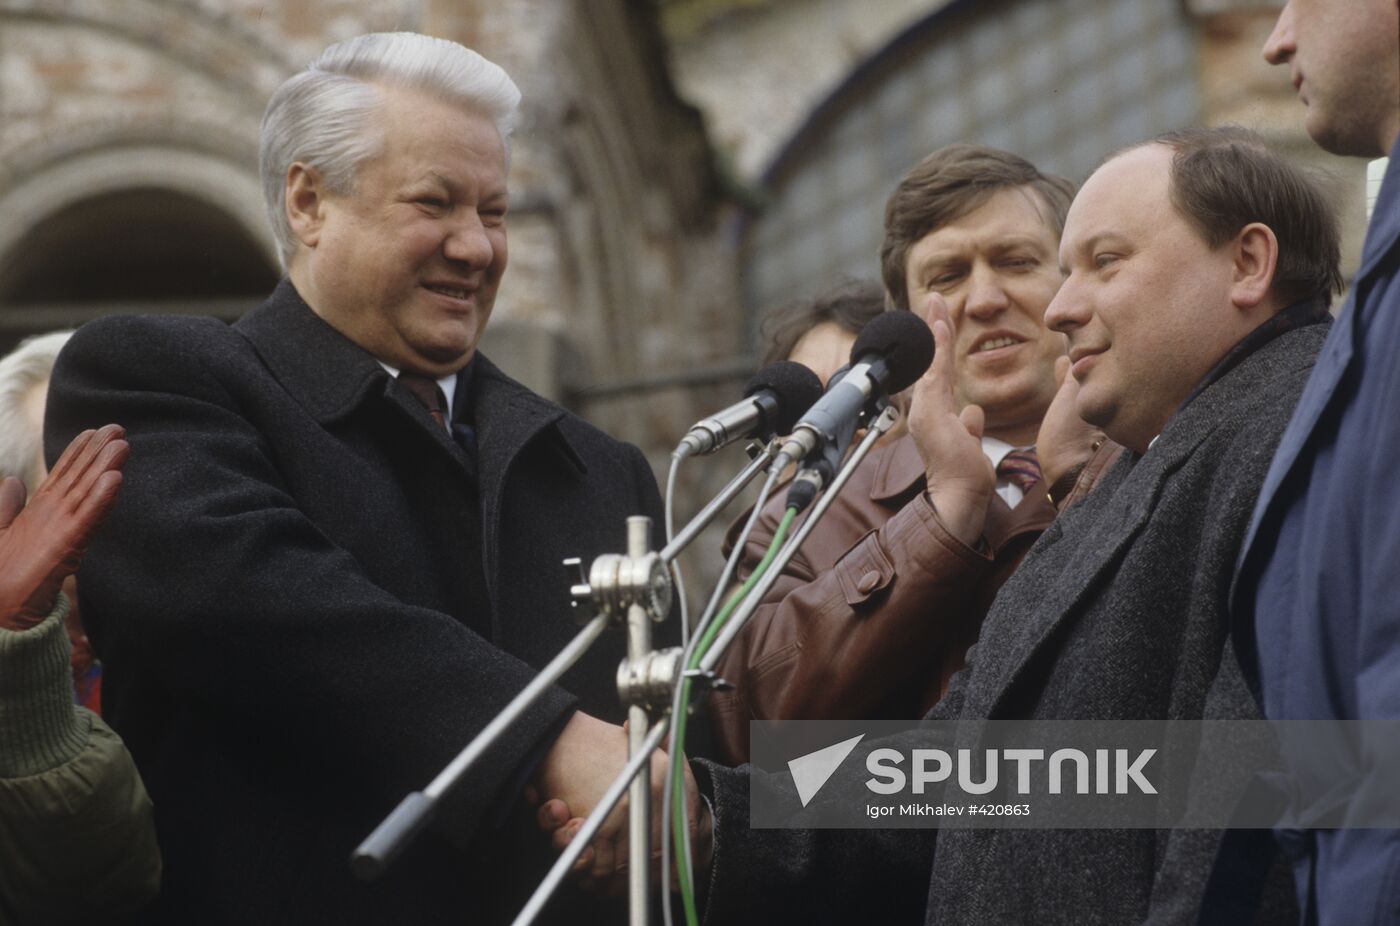 Boris Yeltsin at a rally